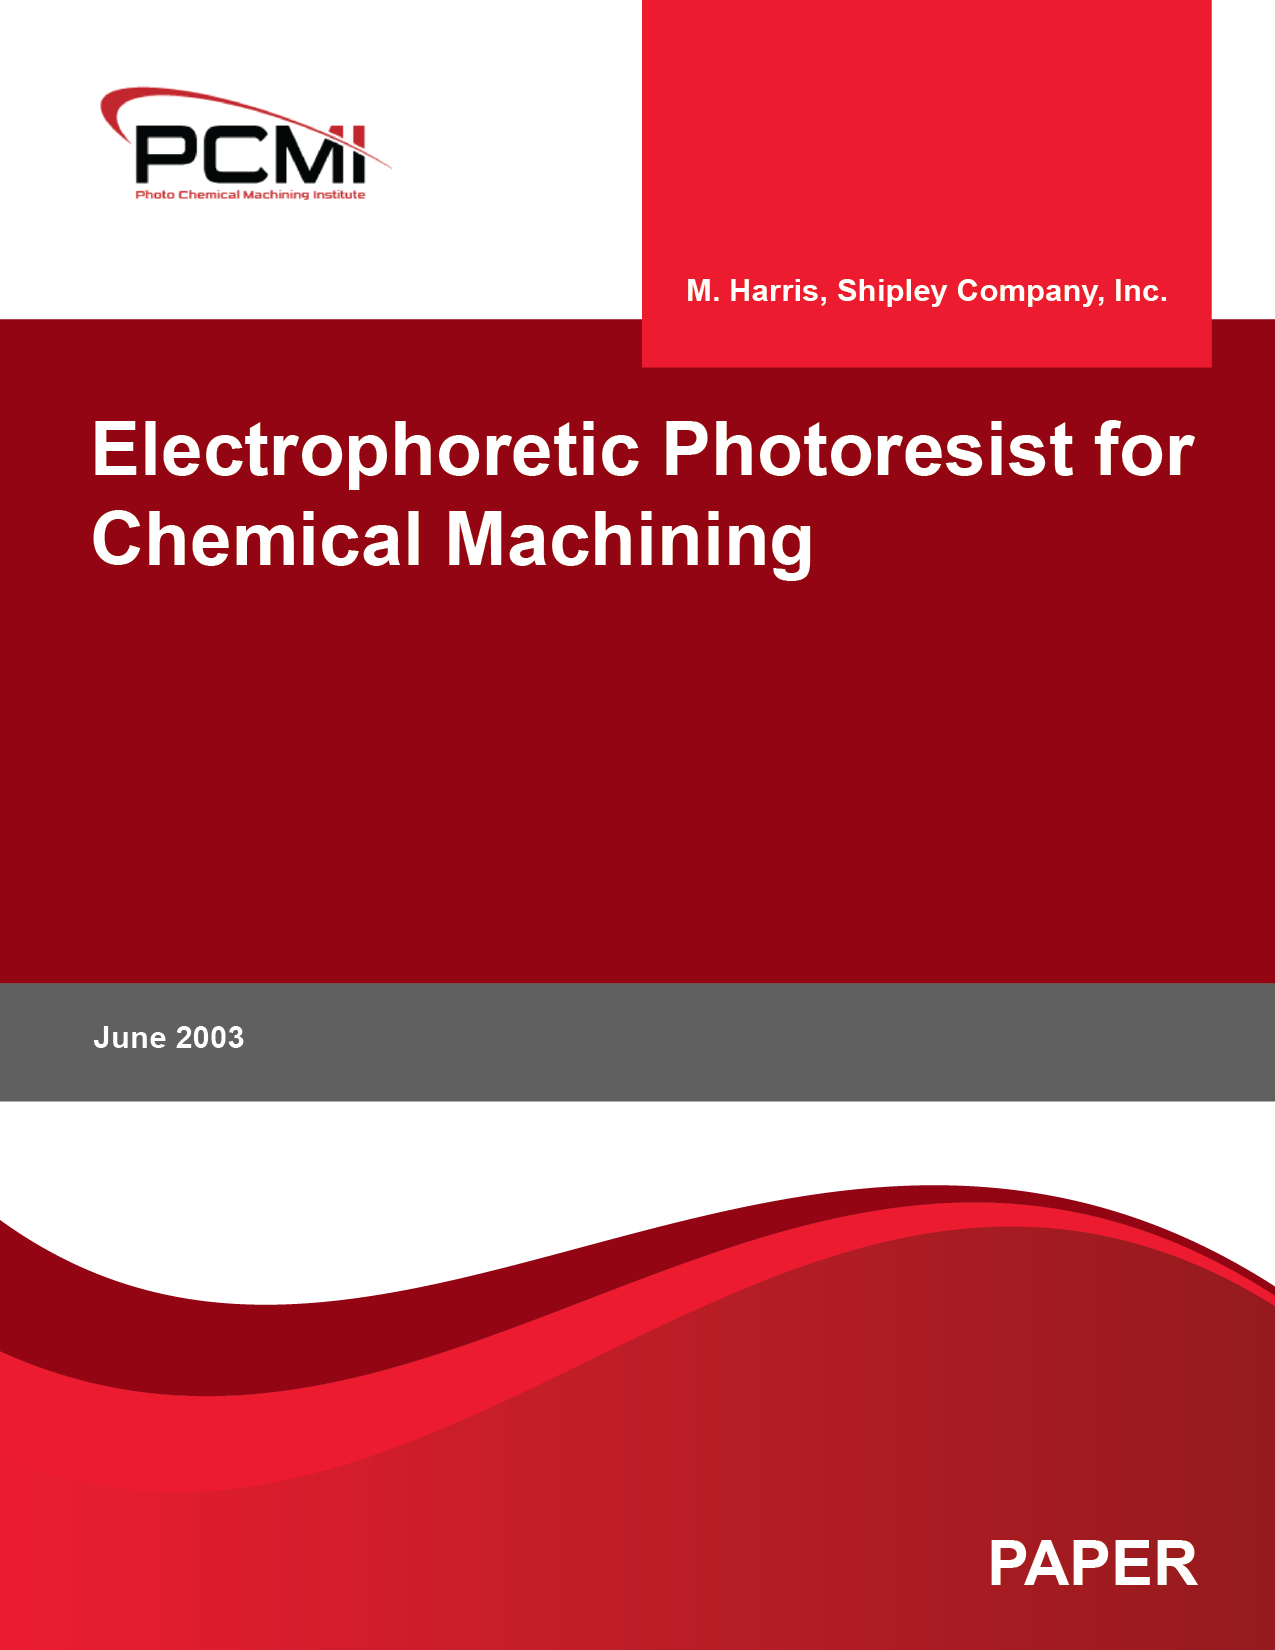 Electrophoretic Photoresist for Chemical Machining